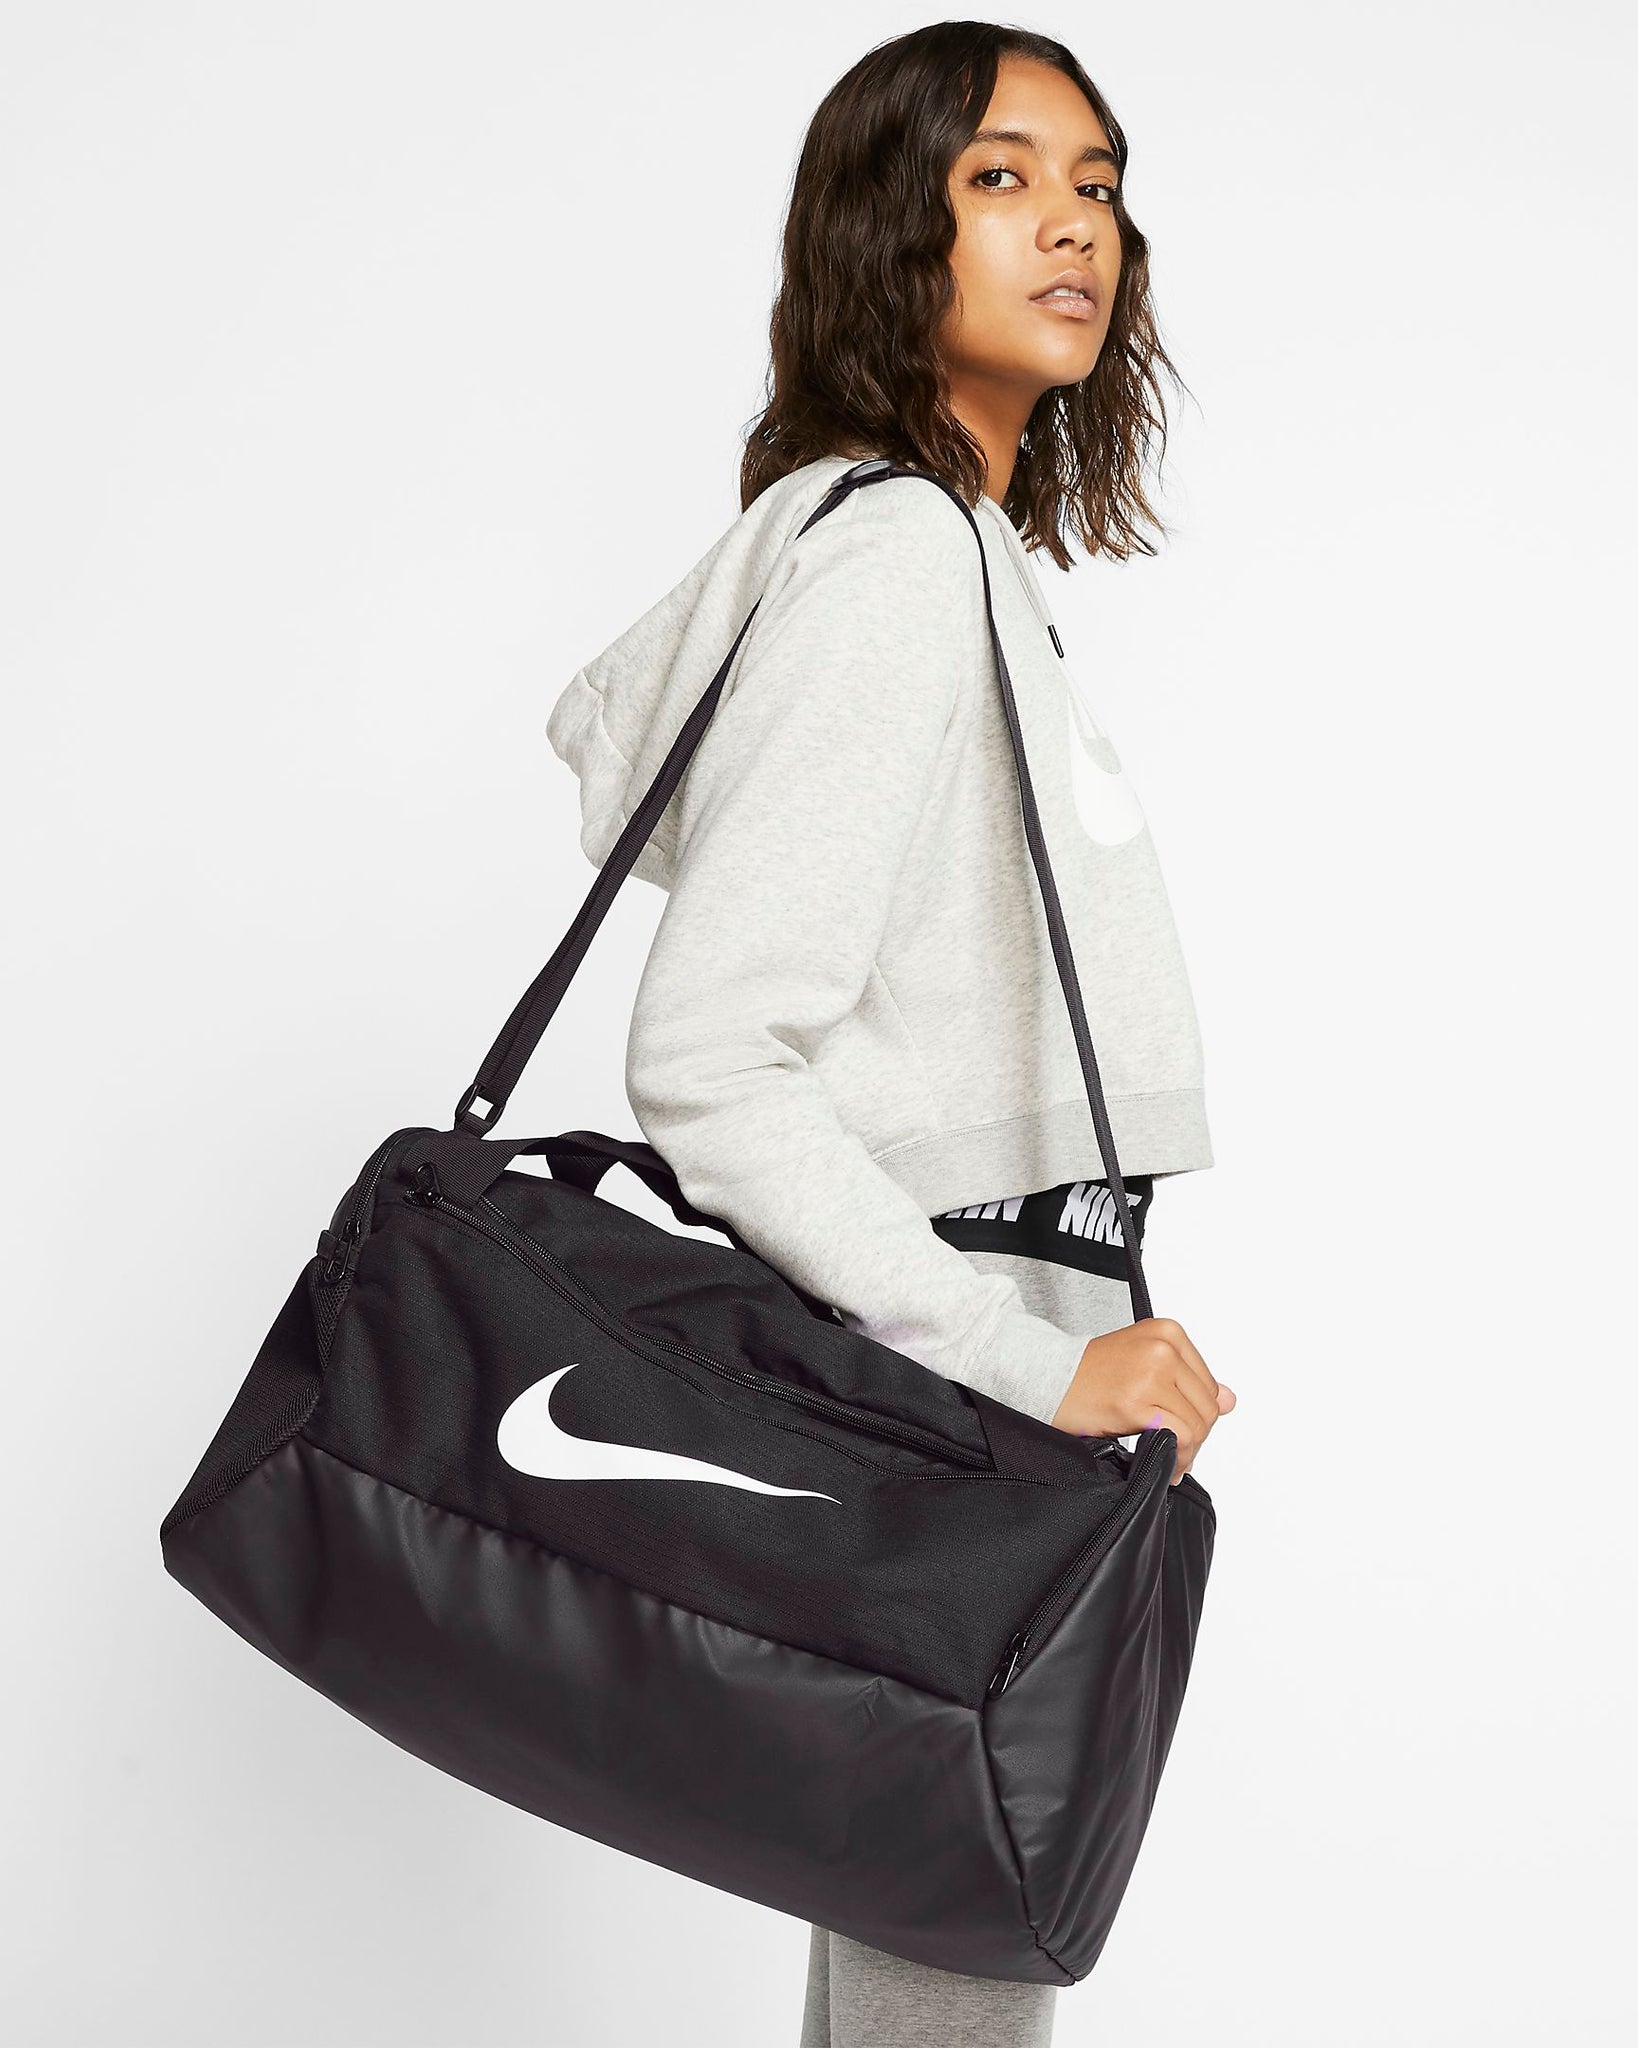 Nike Brasilia Duffel Bag (Small - 41L)(Black/White)(BA5957-010 ...